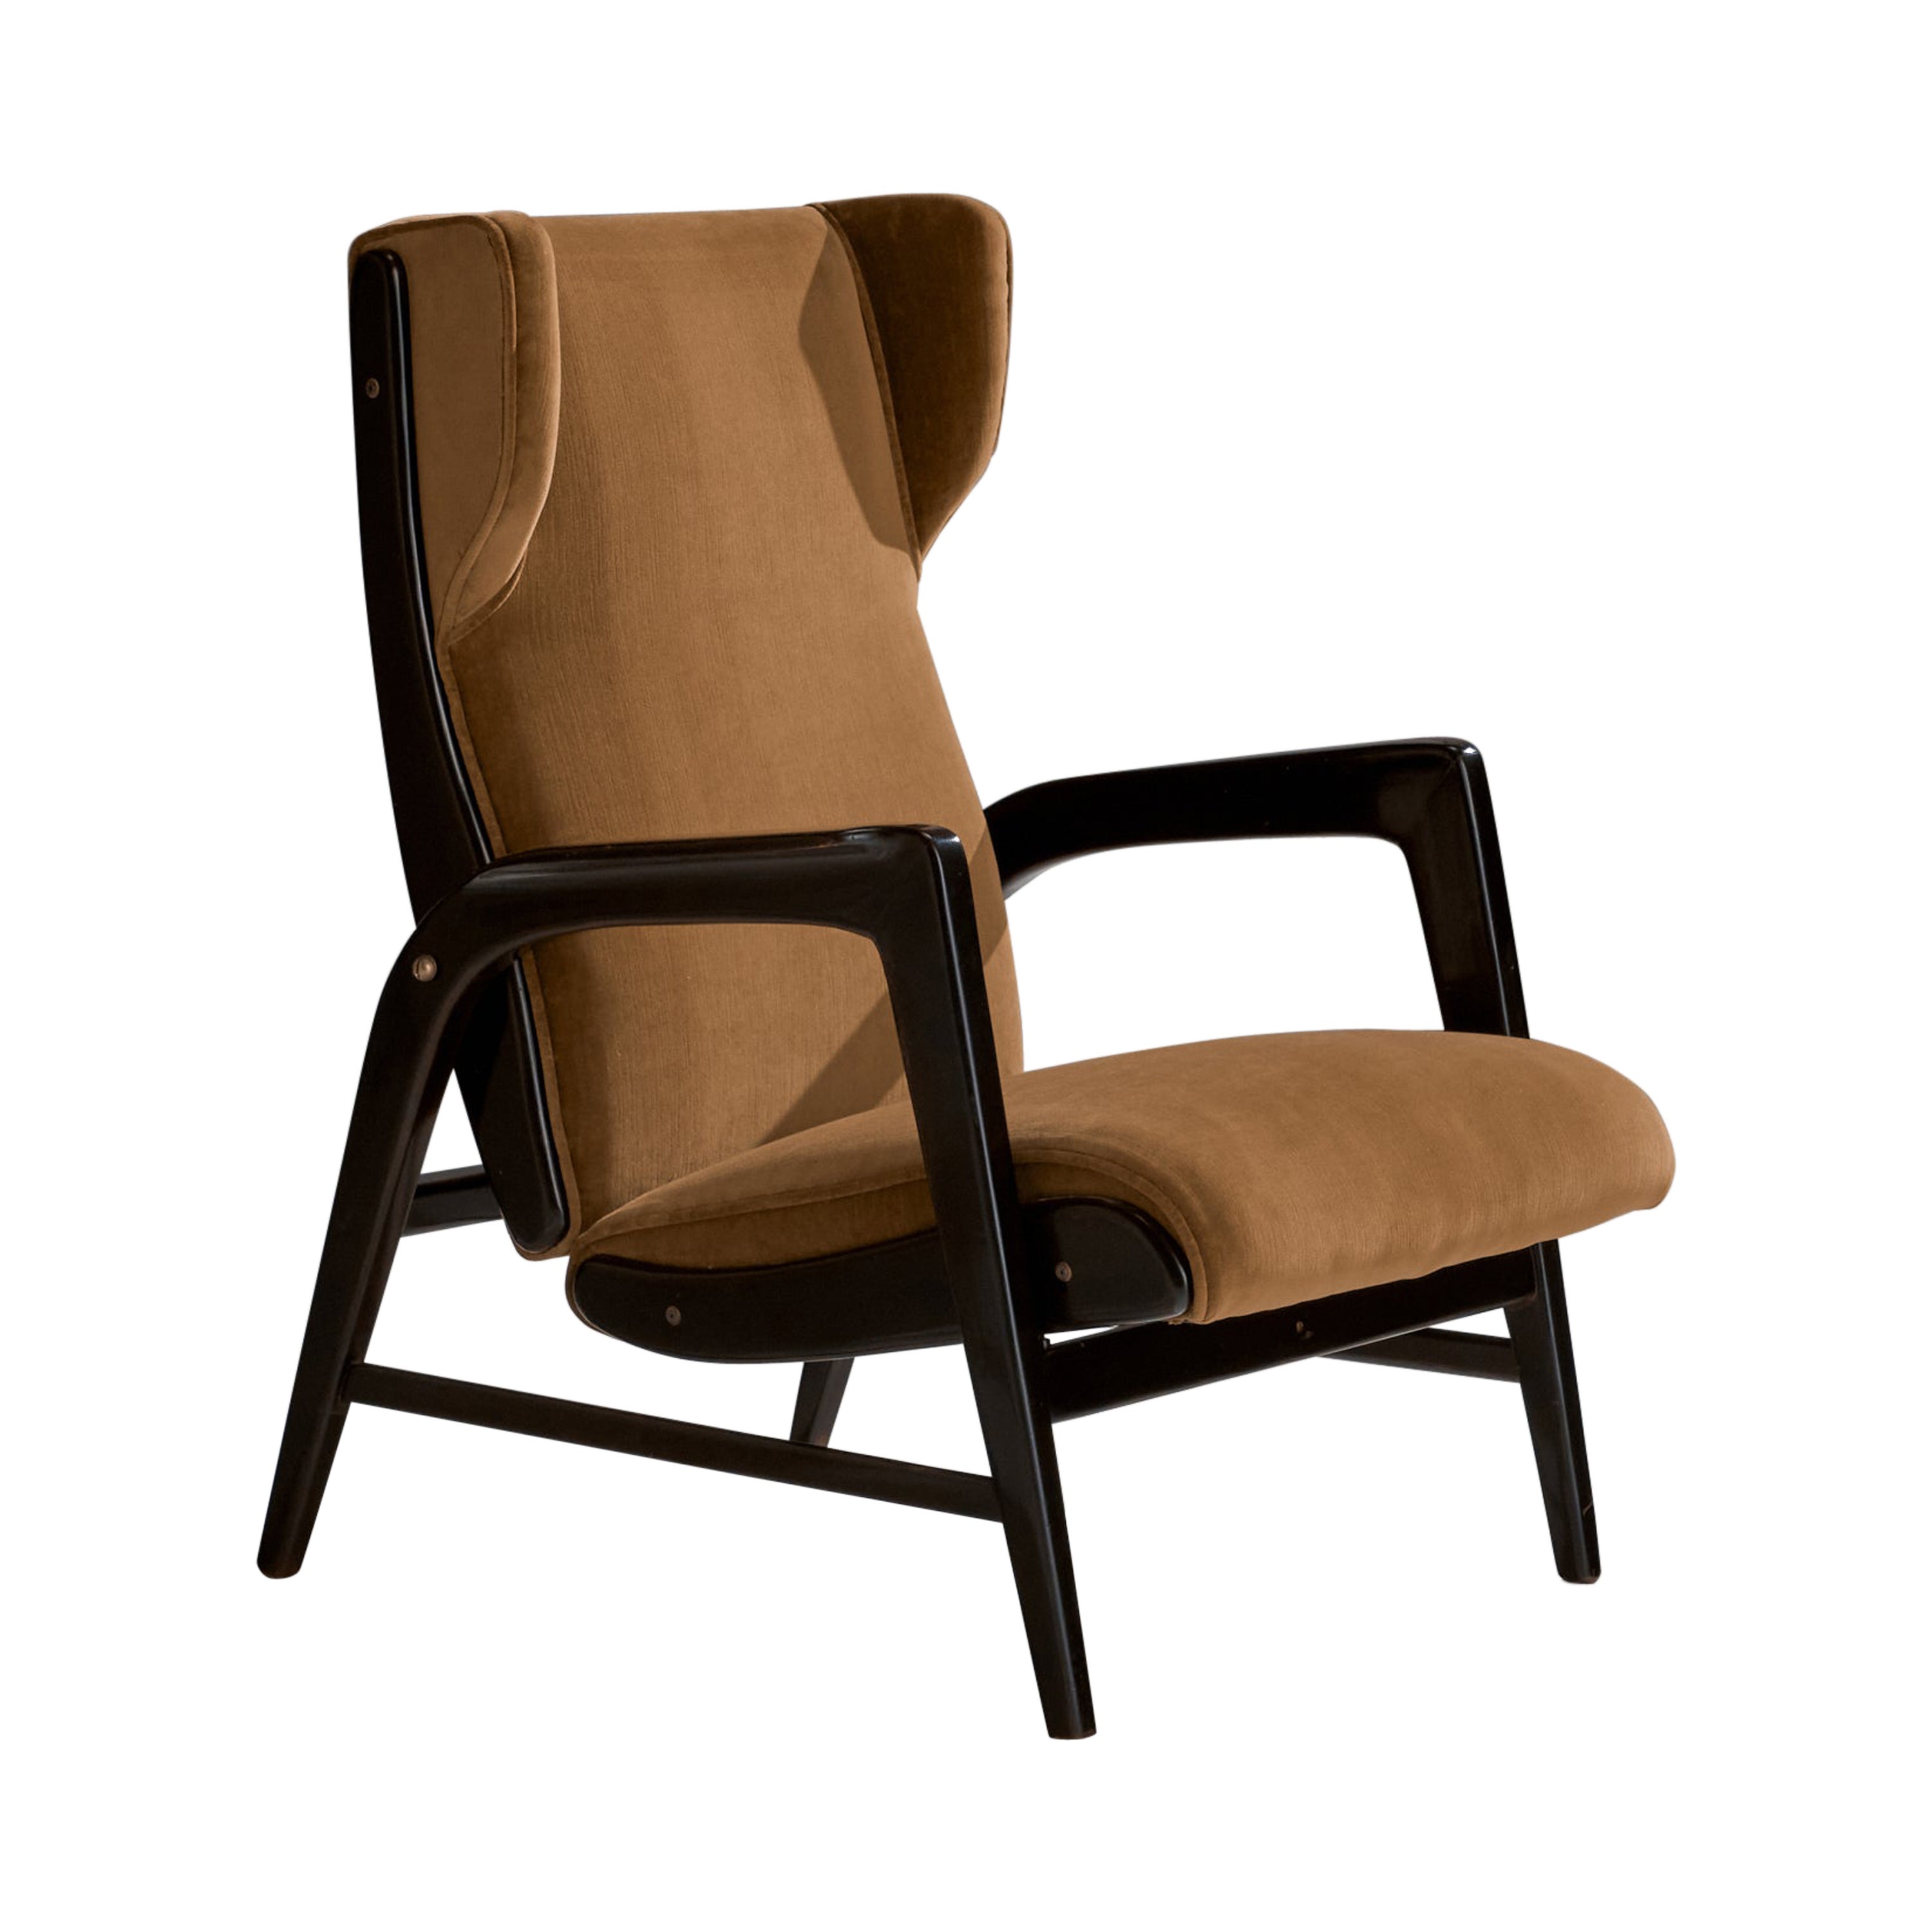 Casa e Giardino Lounge Chairs